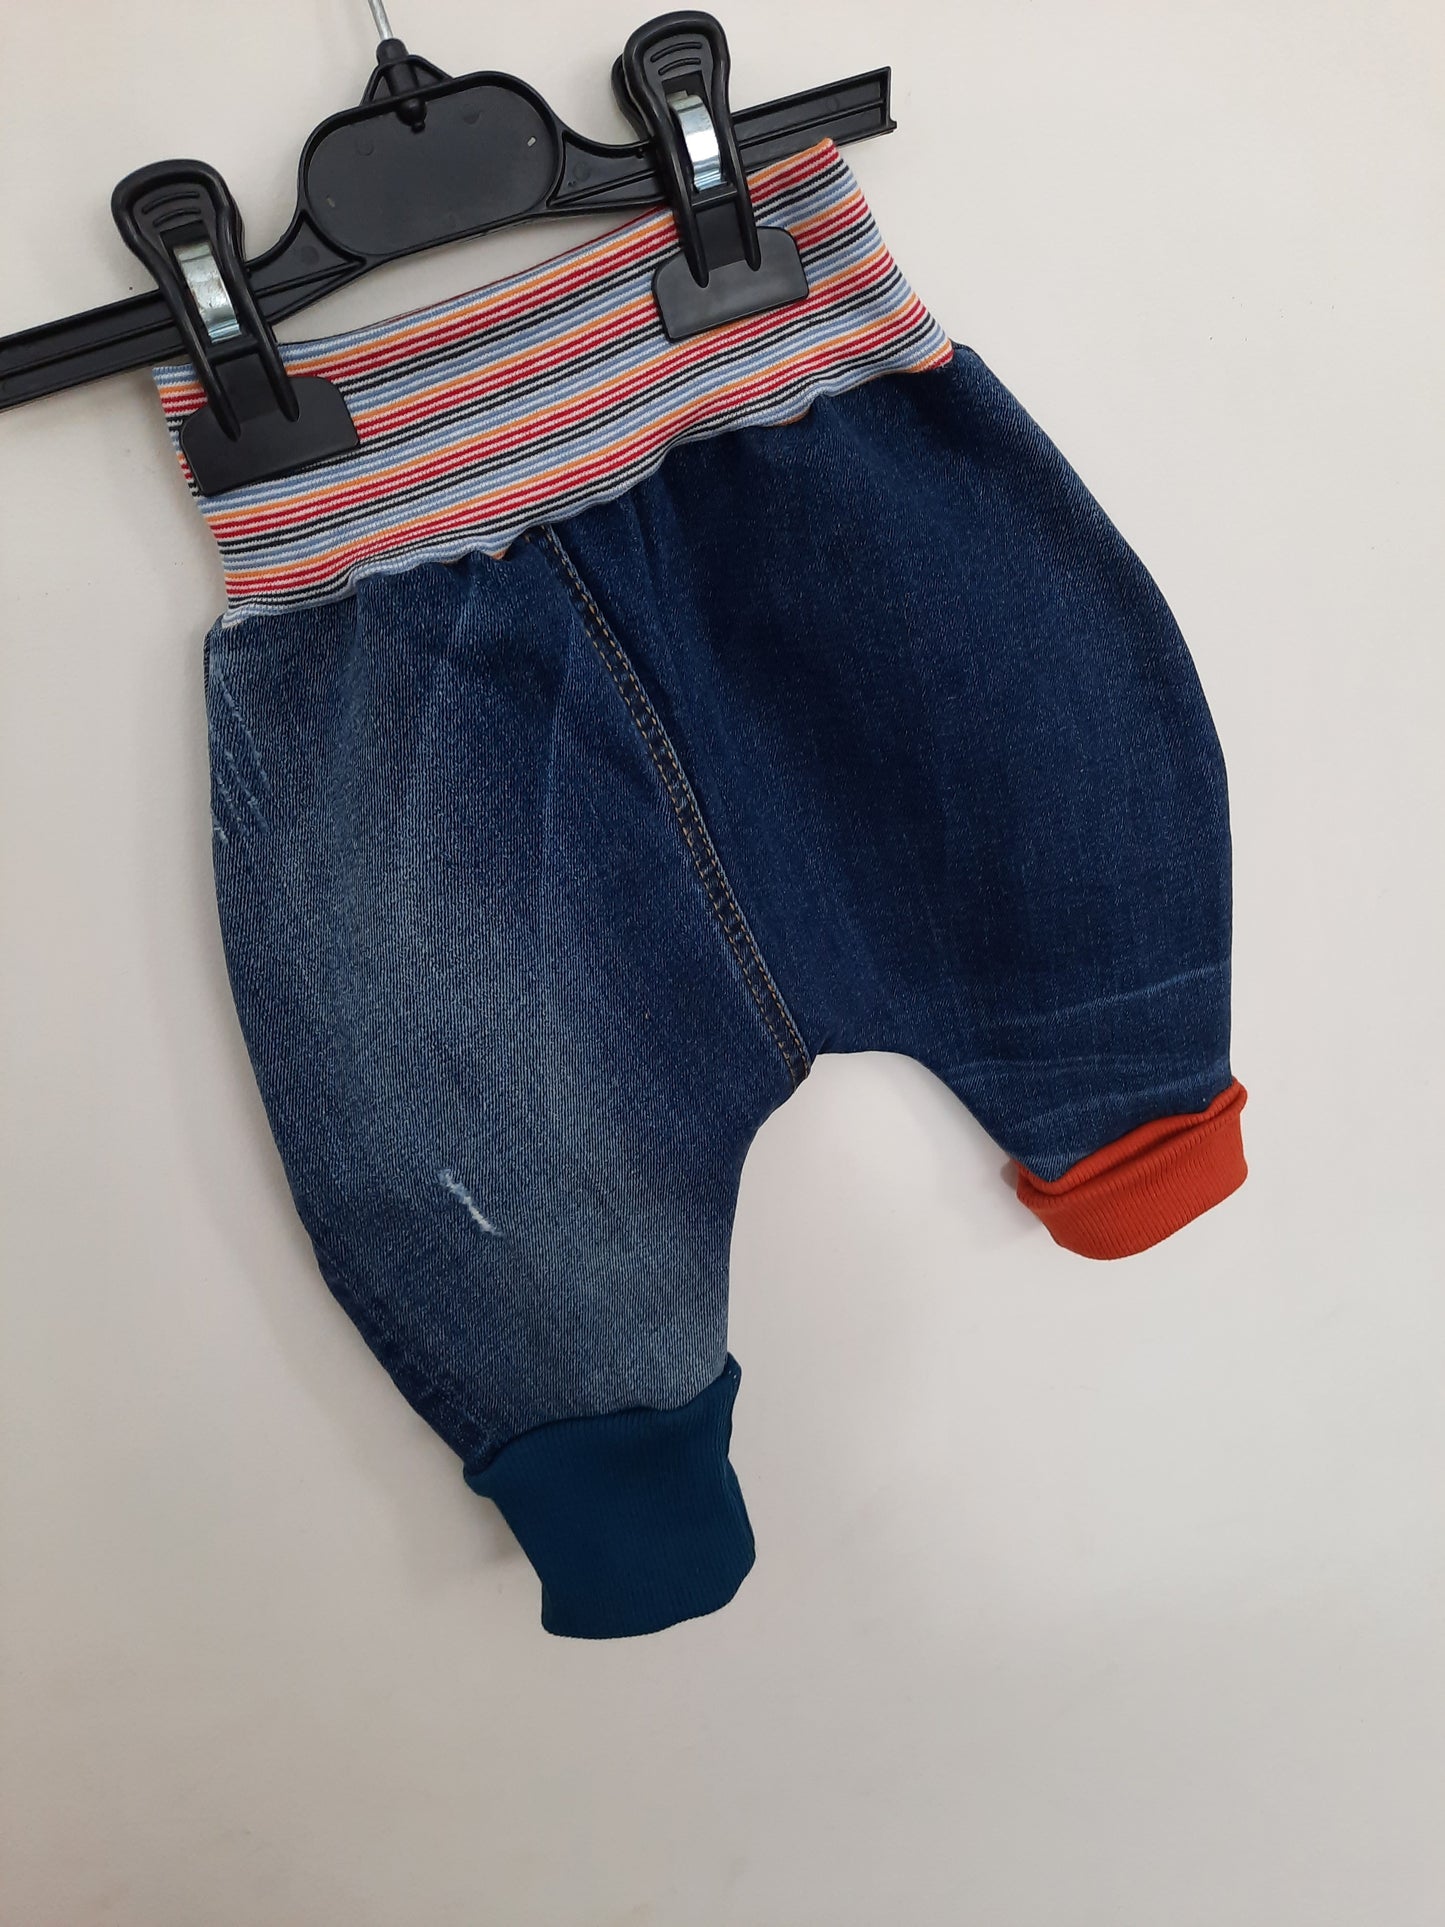 MAE le pantalon sarouel évolutif garçon 3/12 mois, plusieurs coloris, main en france